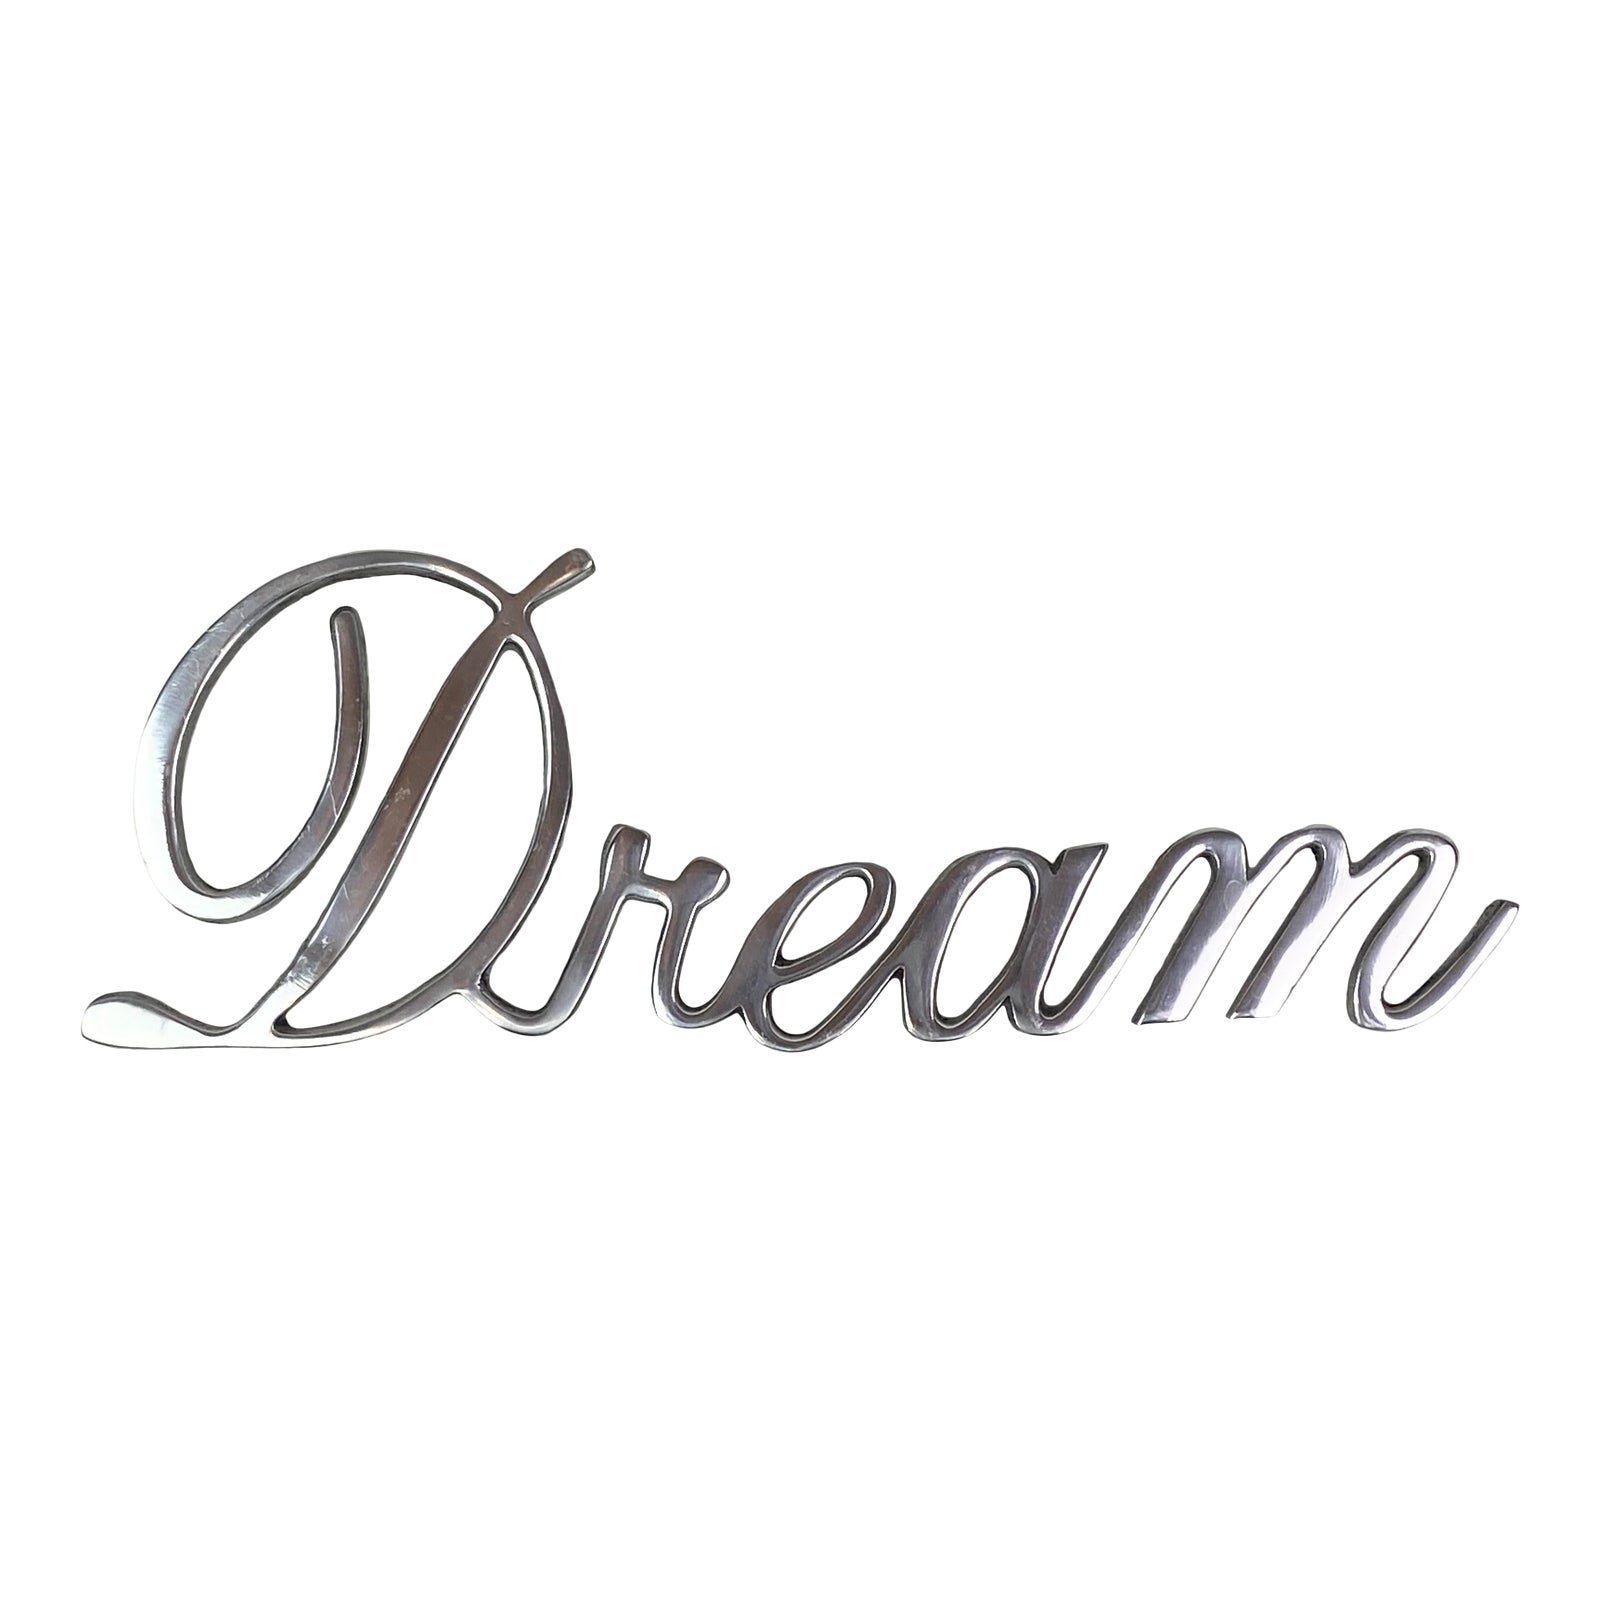 “Dream” Silver Steel Metal Cursive Letters Sign ABBY ESSIE STUDIOS